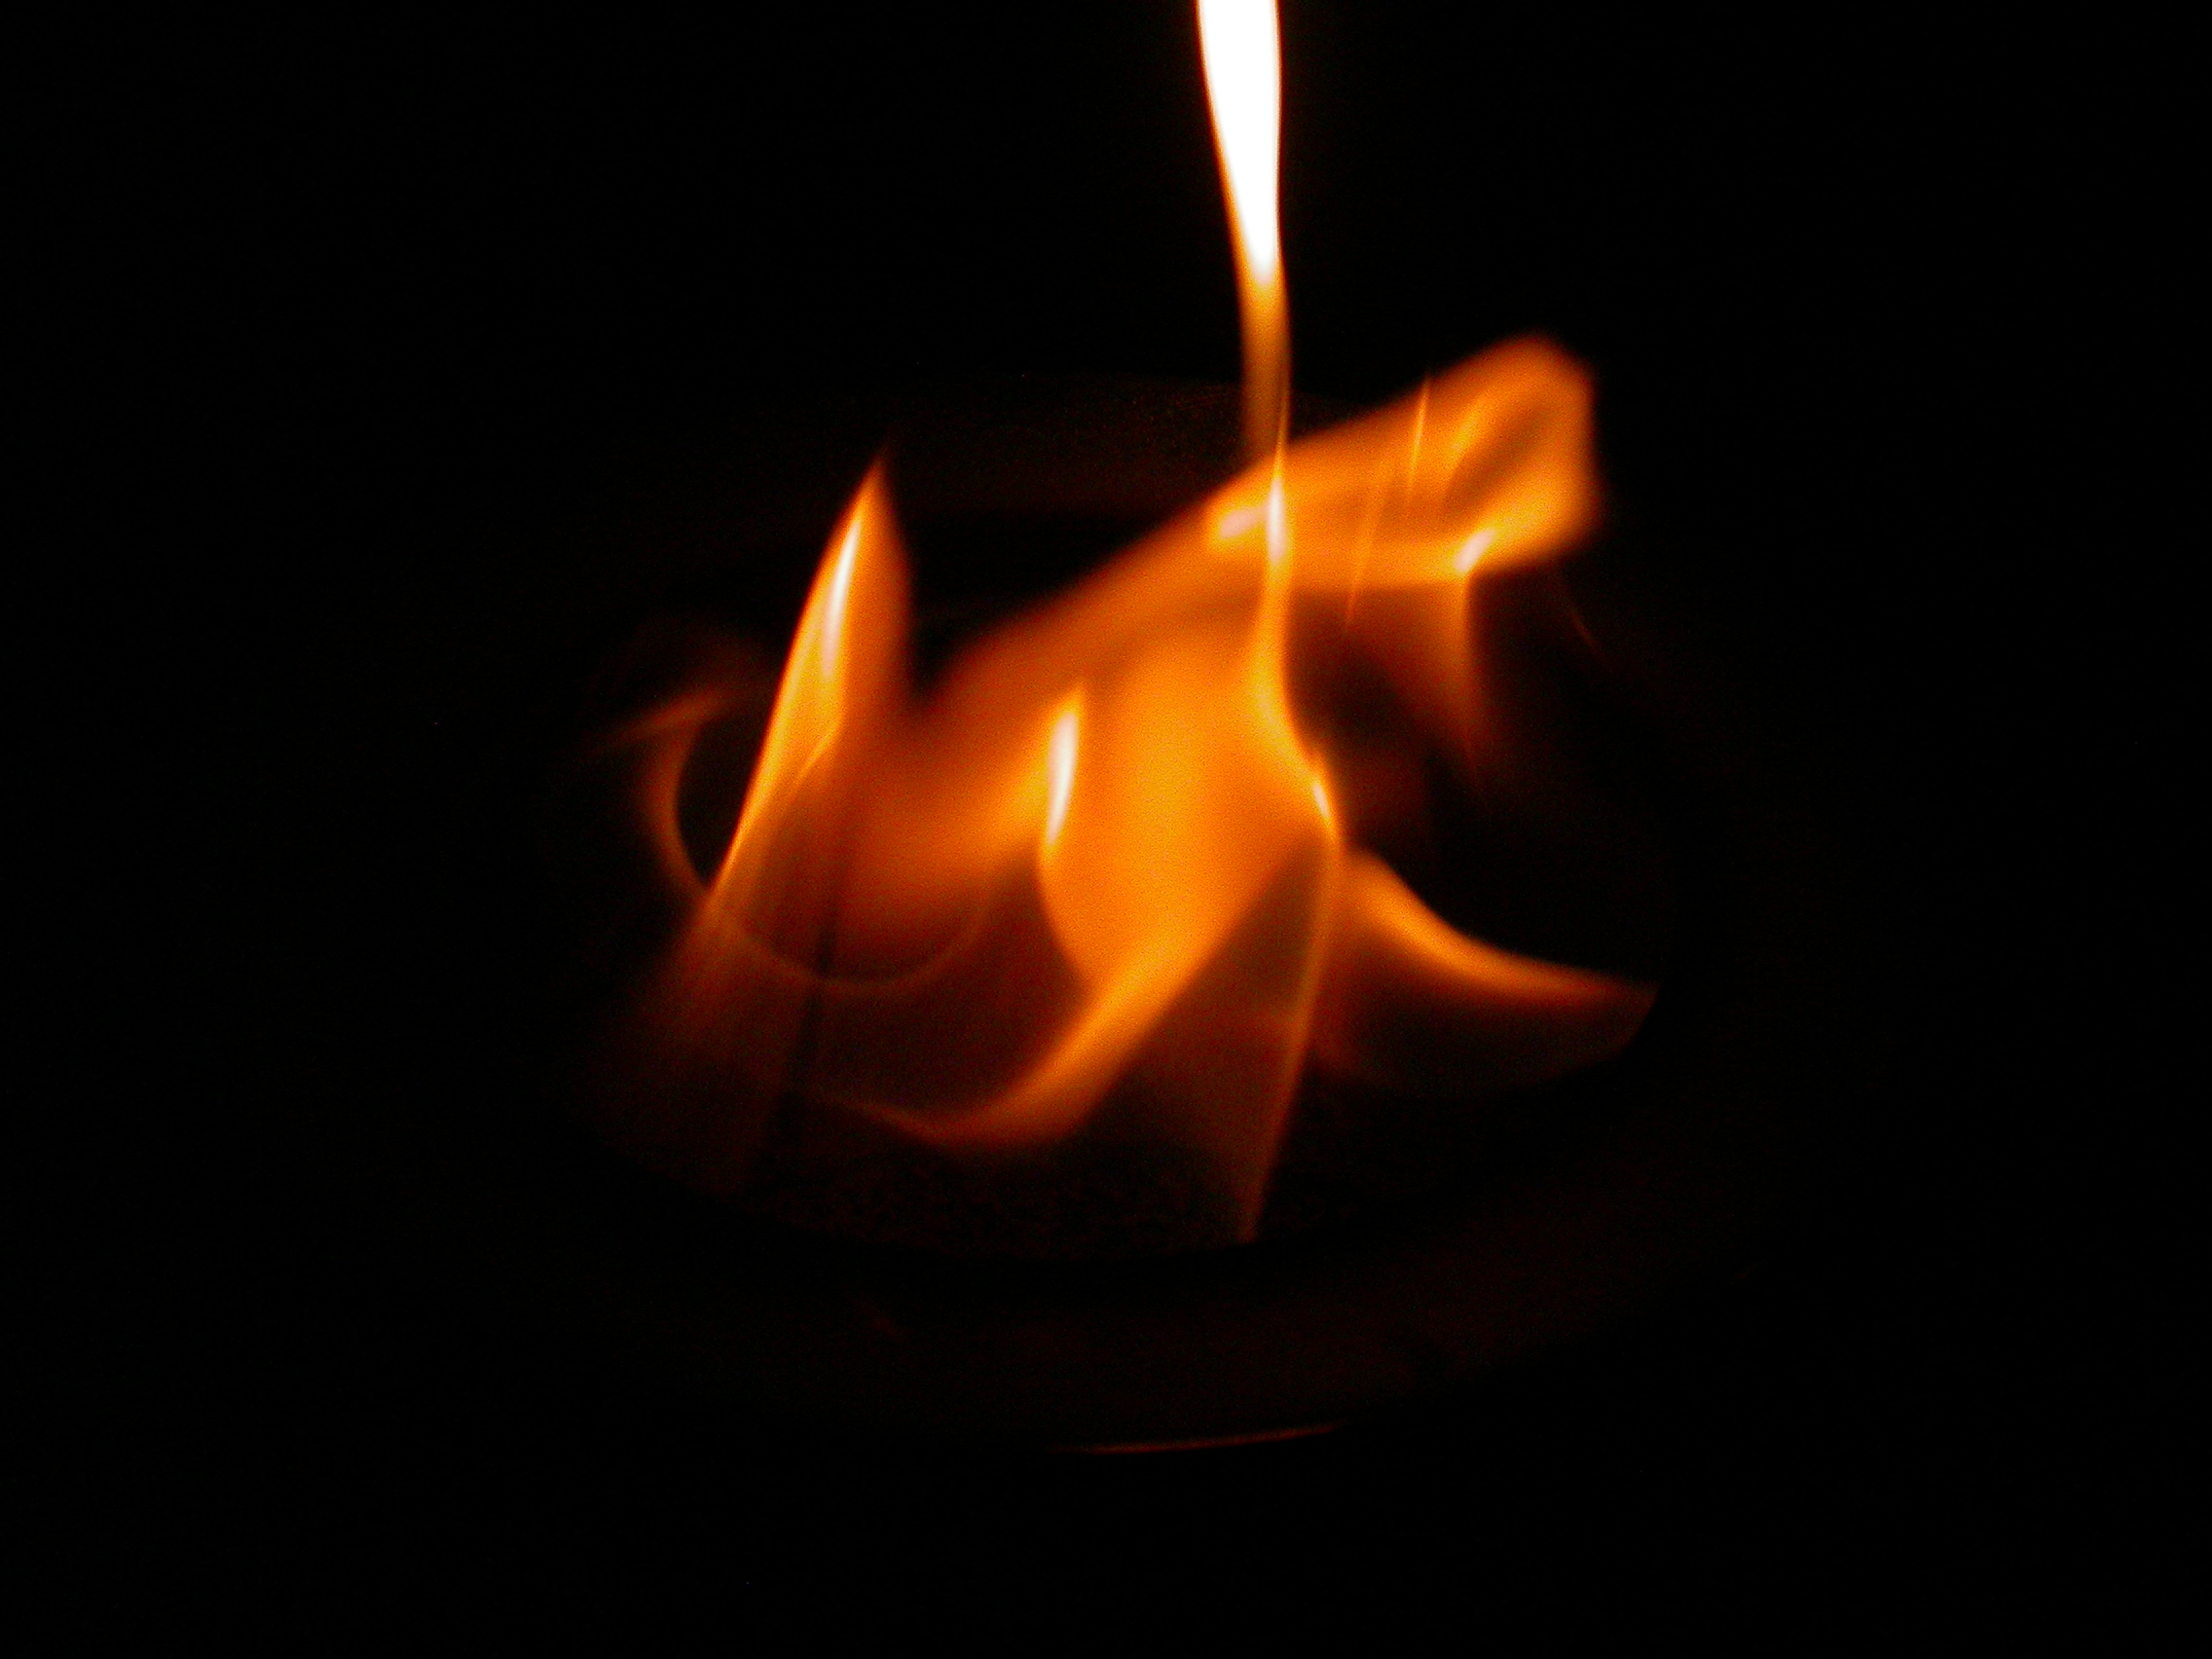 paul fire flame hot element burning orange